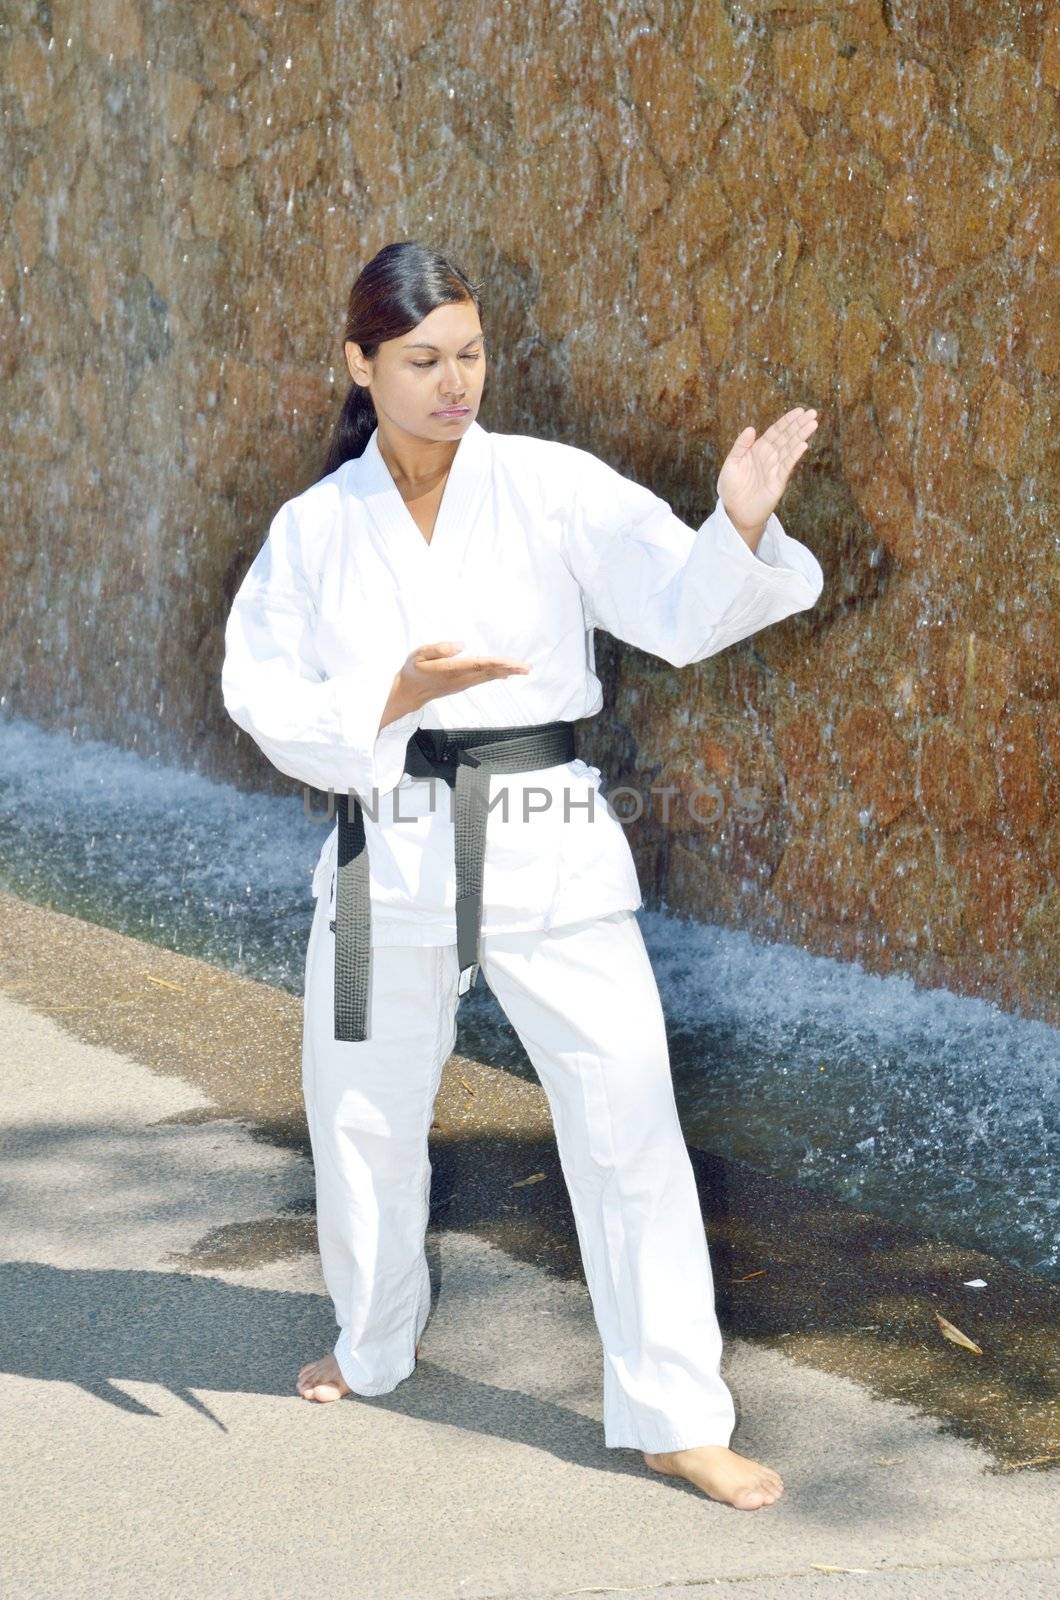 Karate stance by ianmck